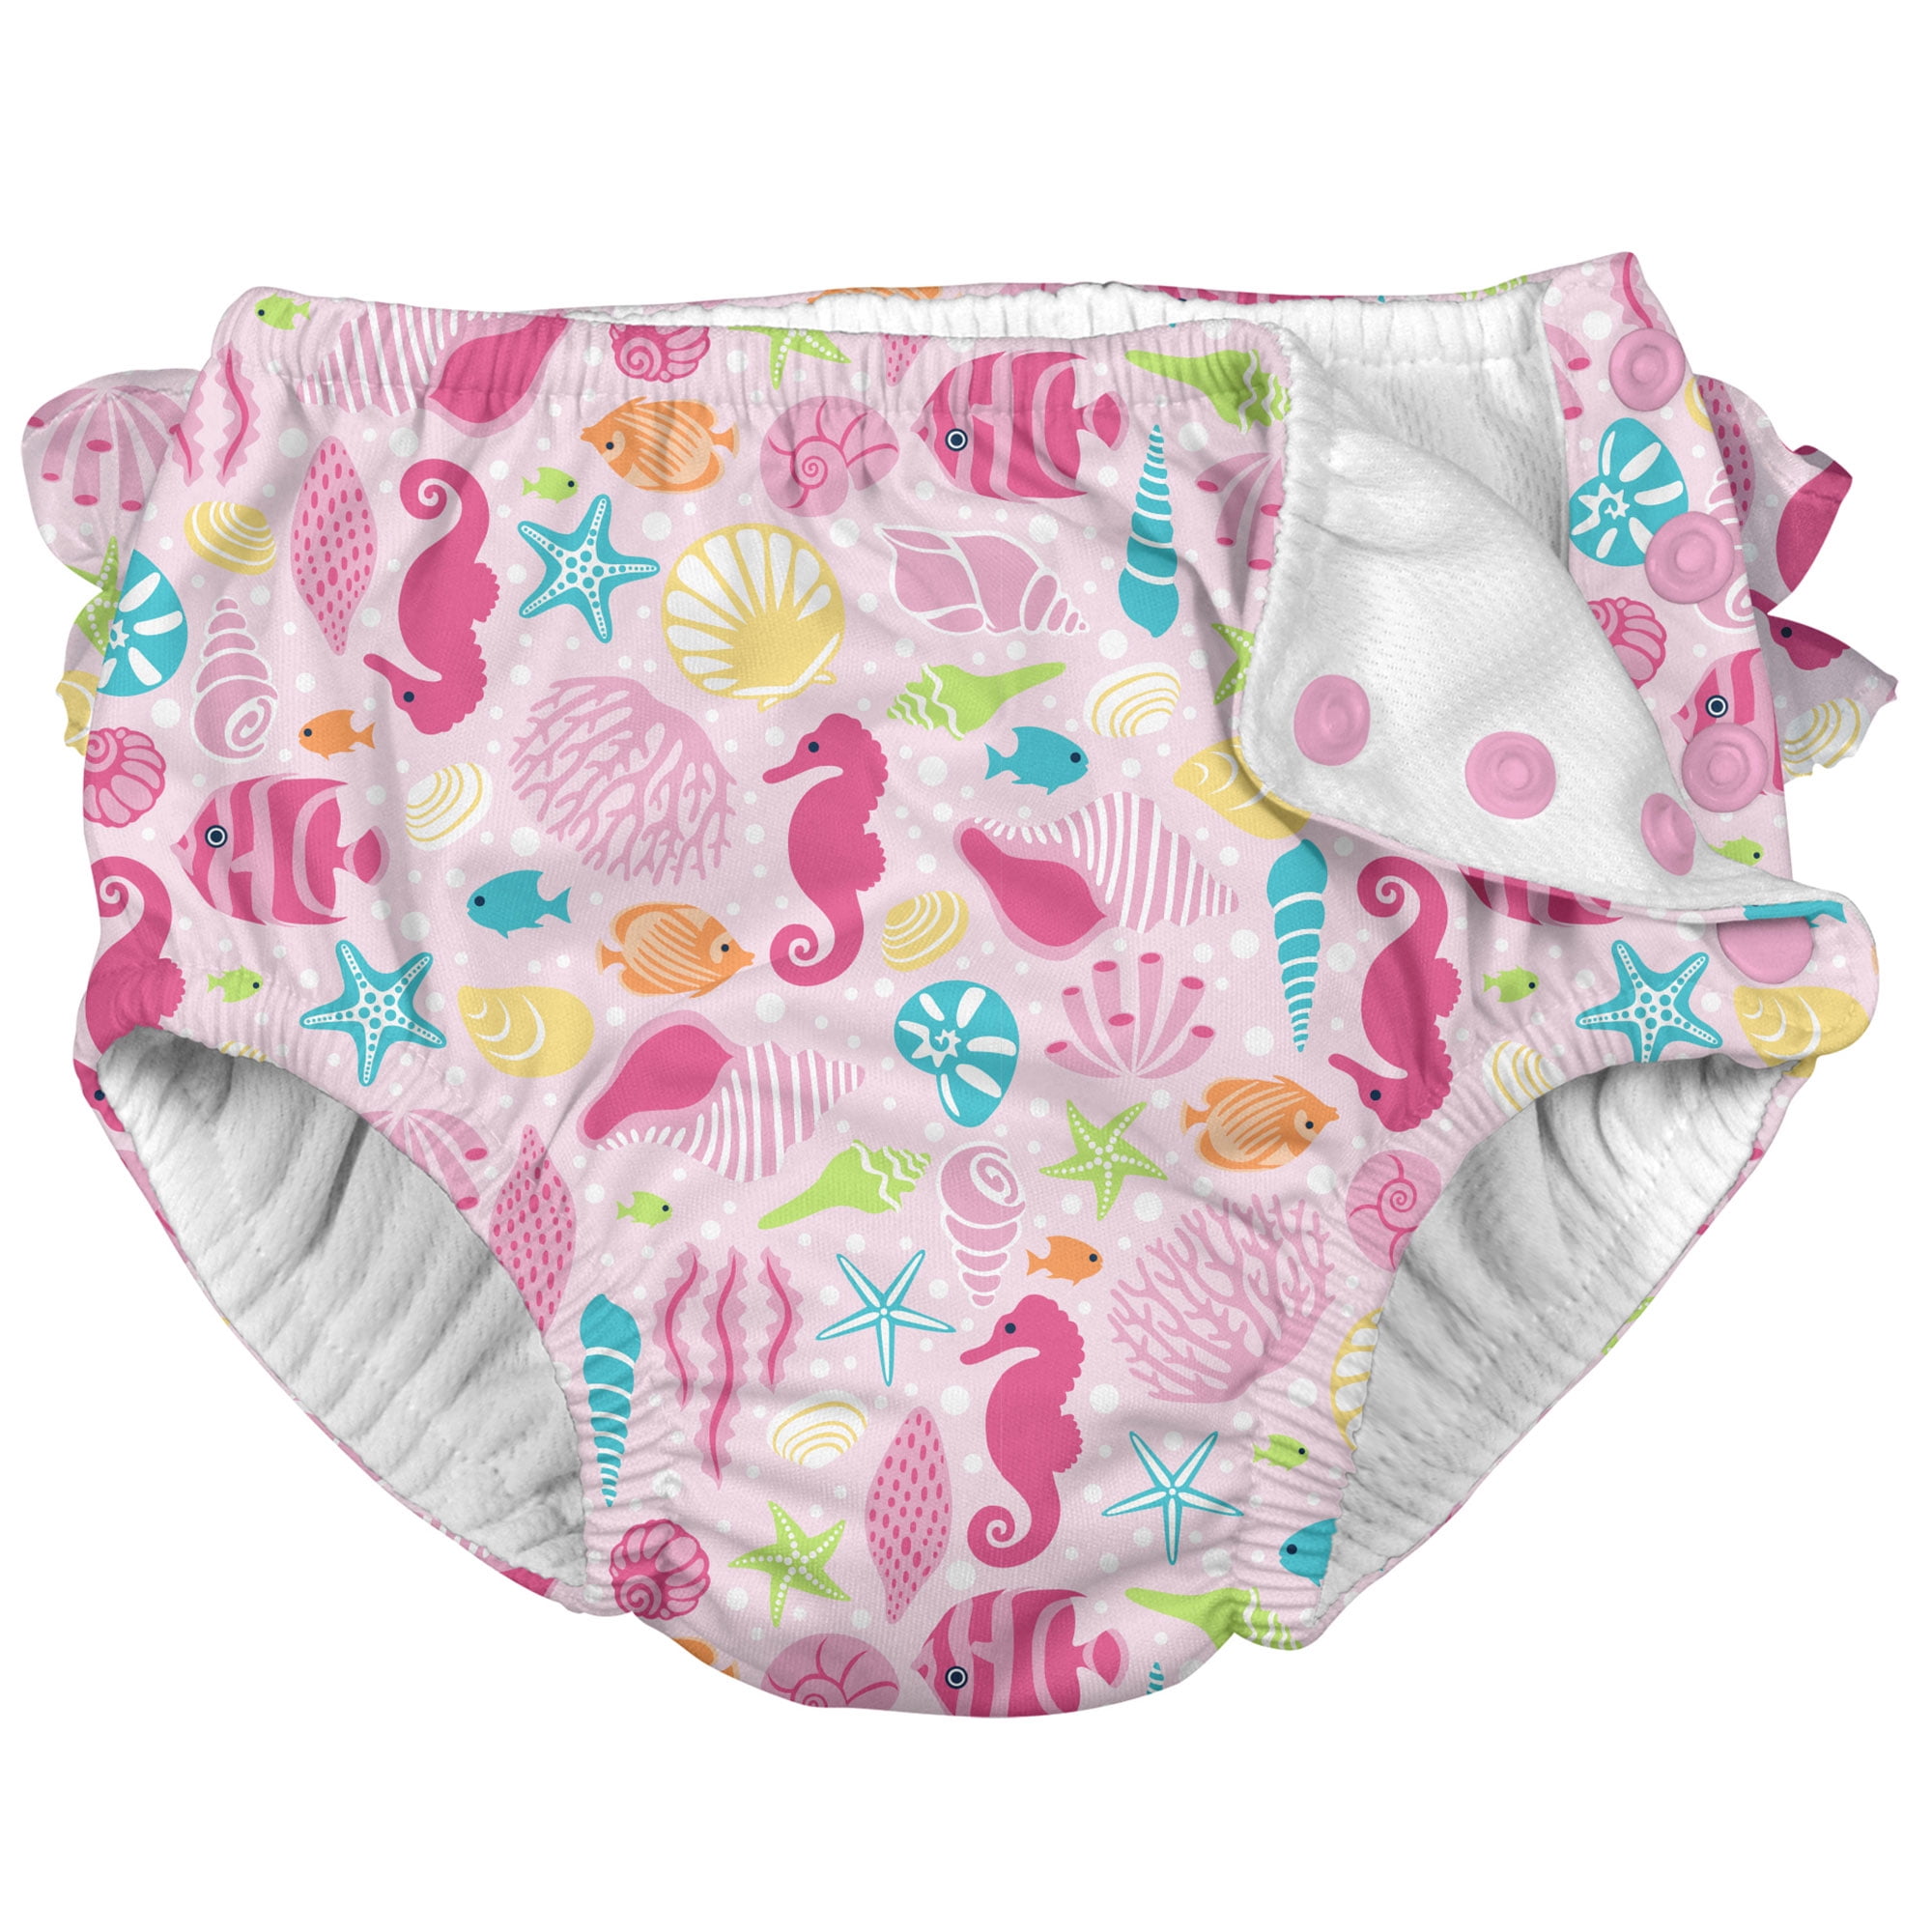 Leveret Kids Baby Boys Girls Reusable Absorbent Swim Diaper UPF 50 Pink Size 18-24 Months 